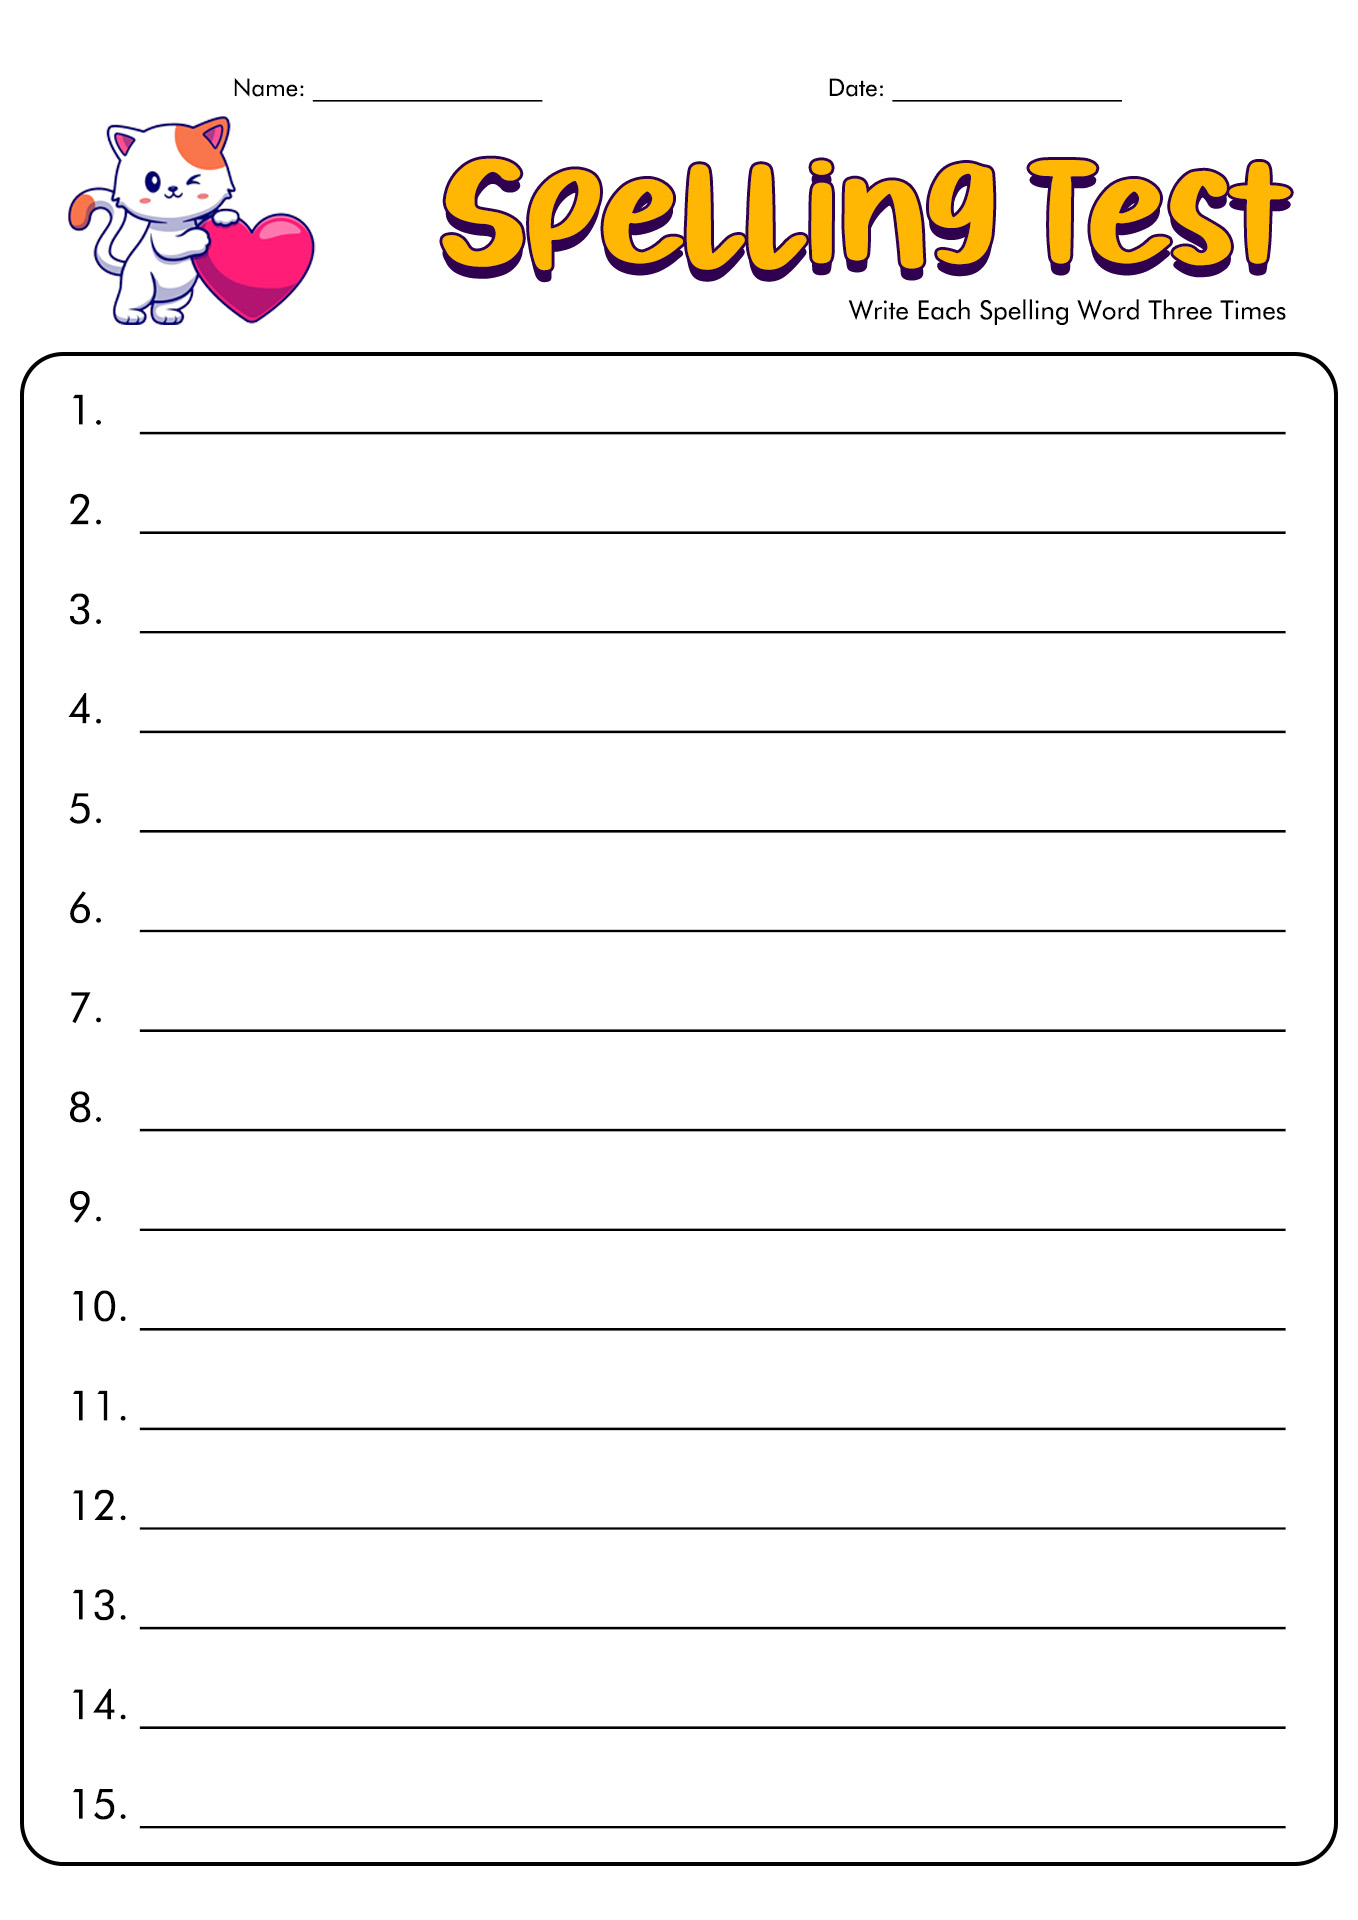 Blank Spelling Test Form Image